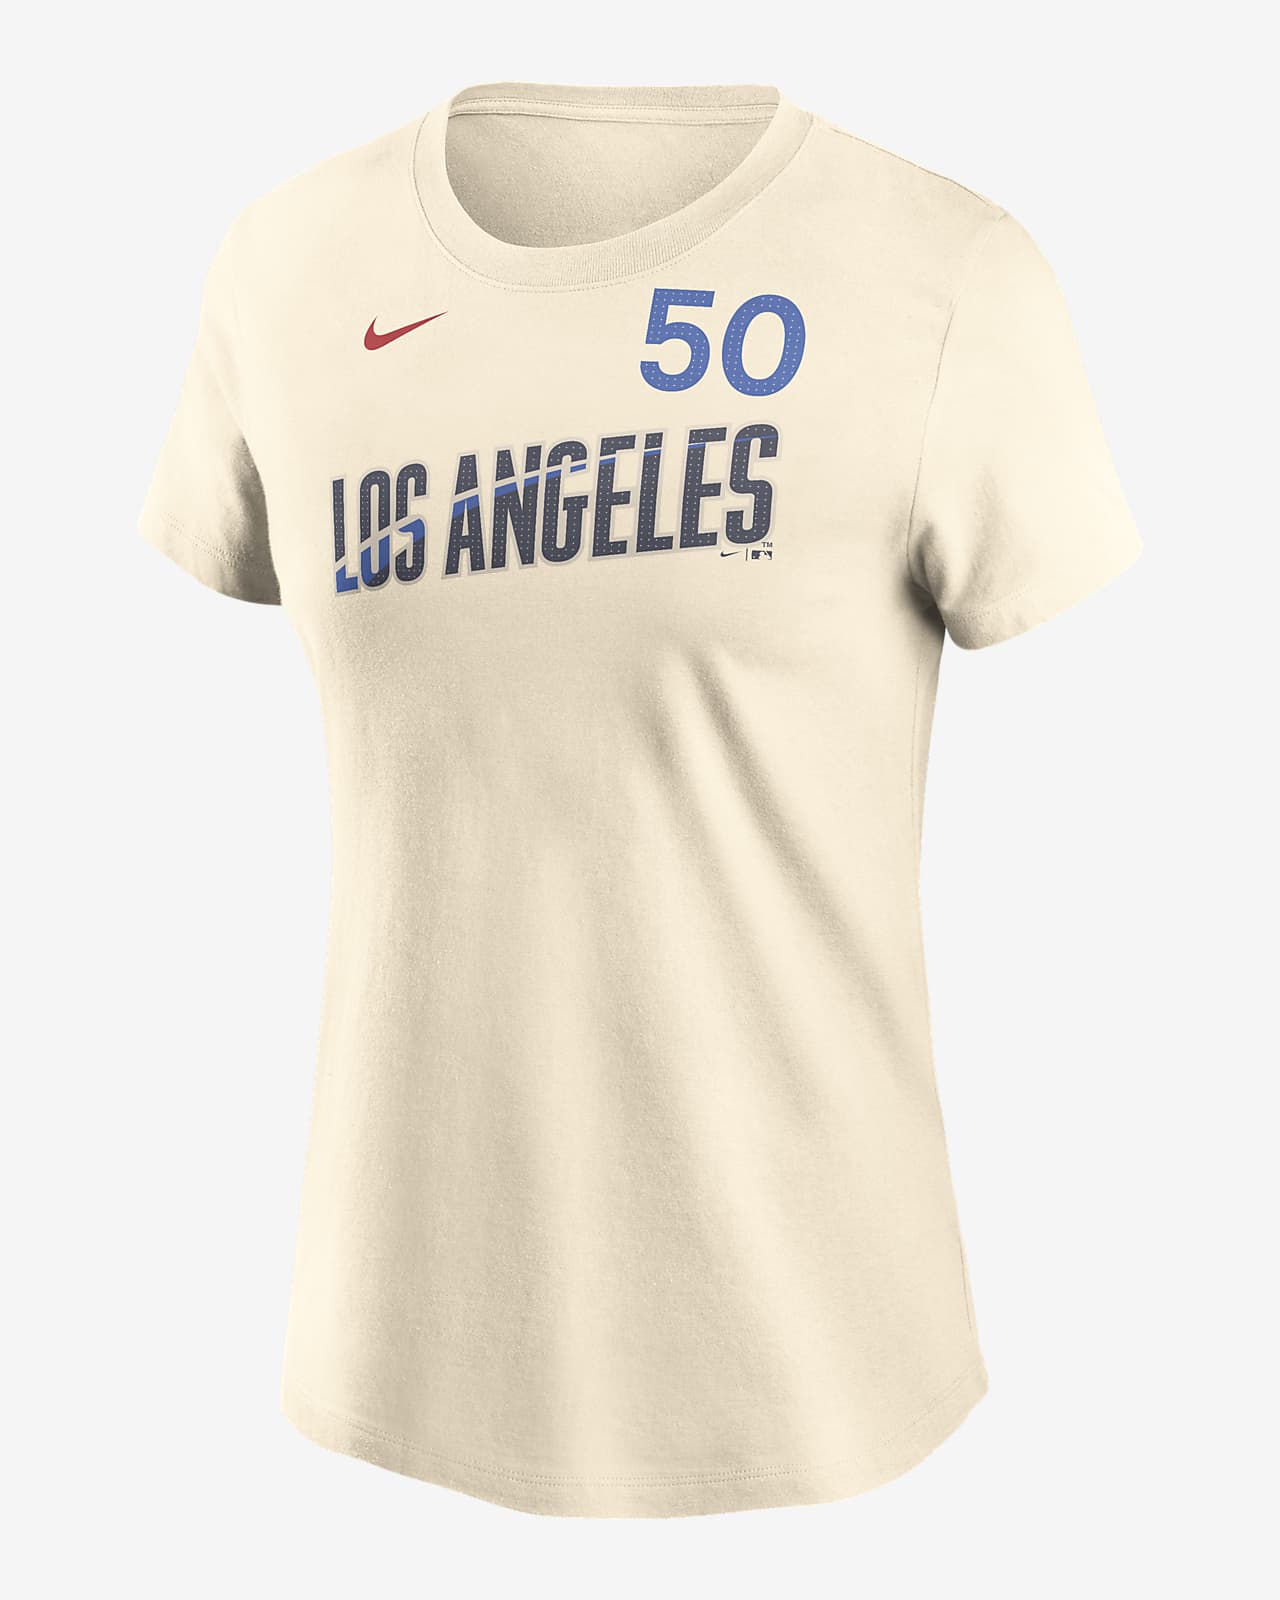 Playera Nike de la MLB para mujer Mookie Betts Los Angeles Dodgers City Connect Fuse